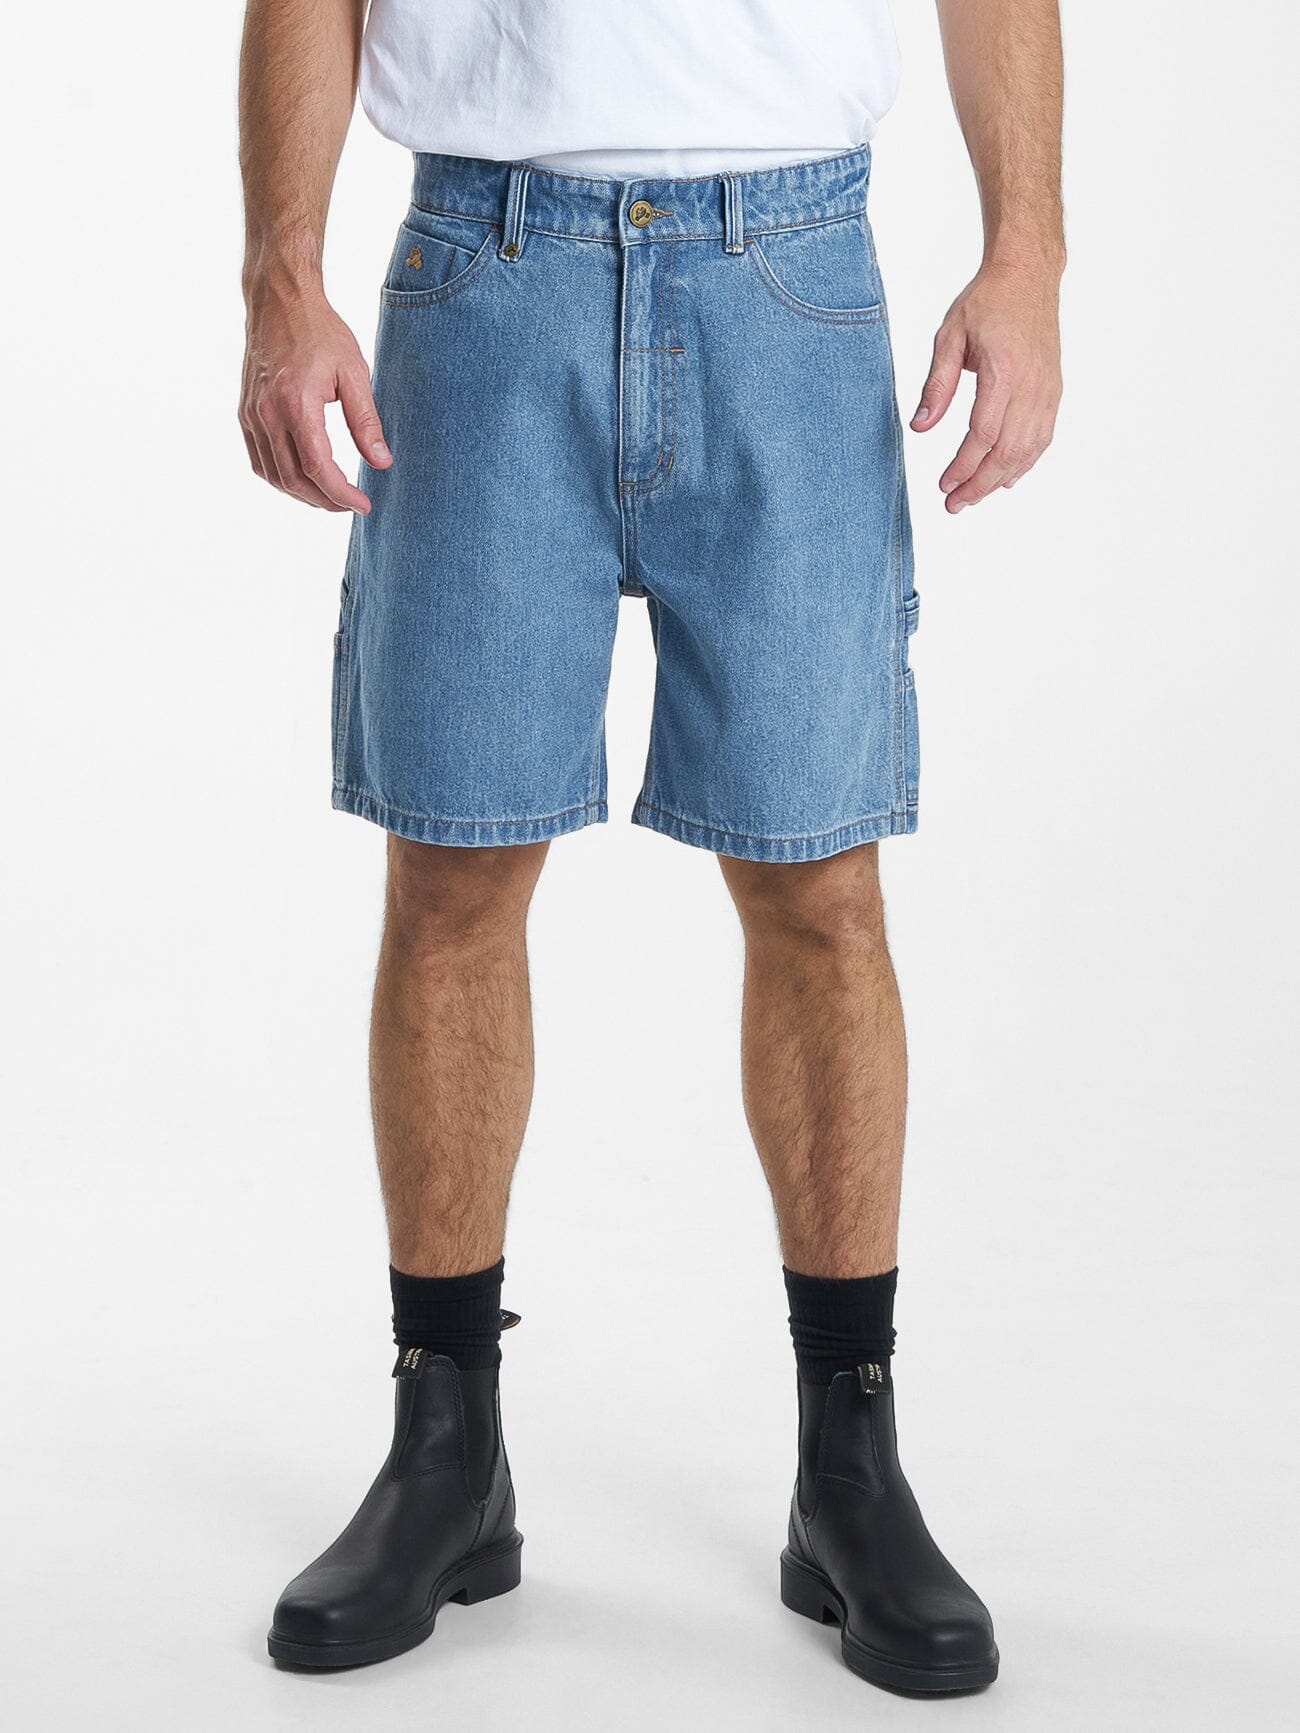 Buy SUB Men Short Pants Online